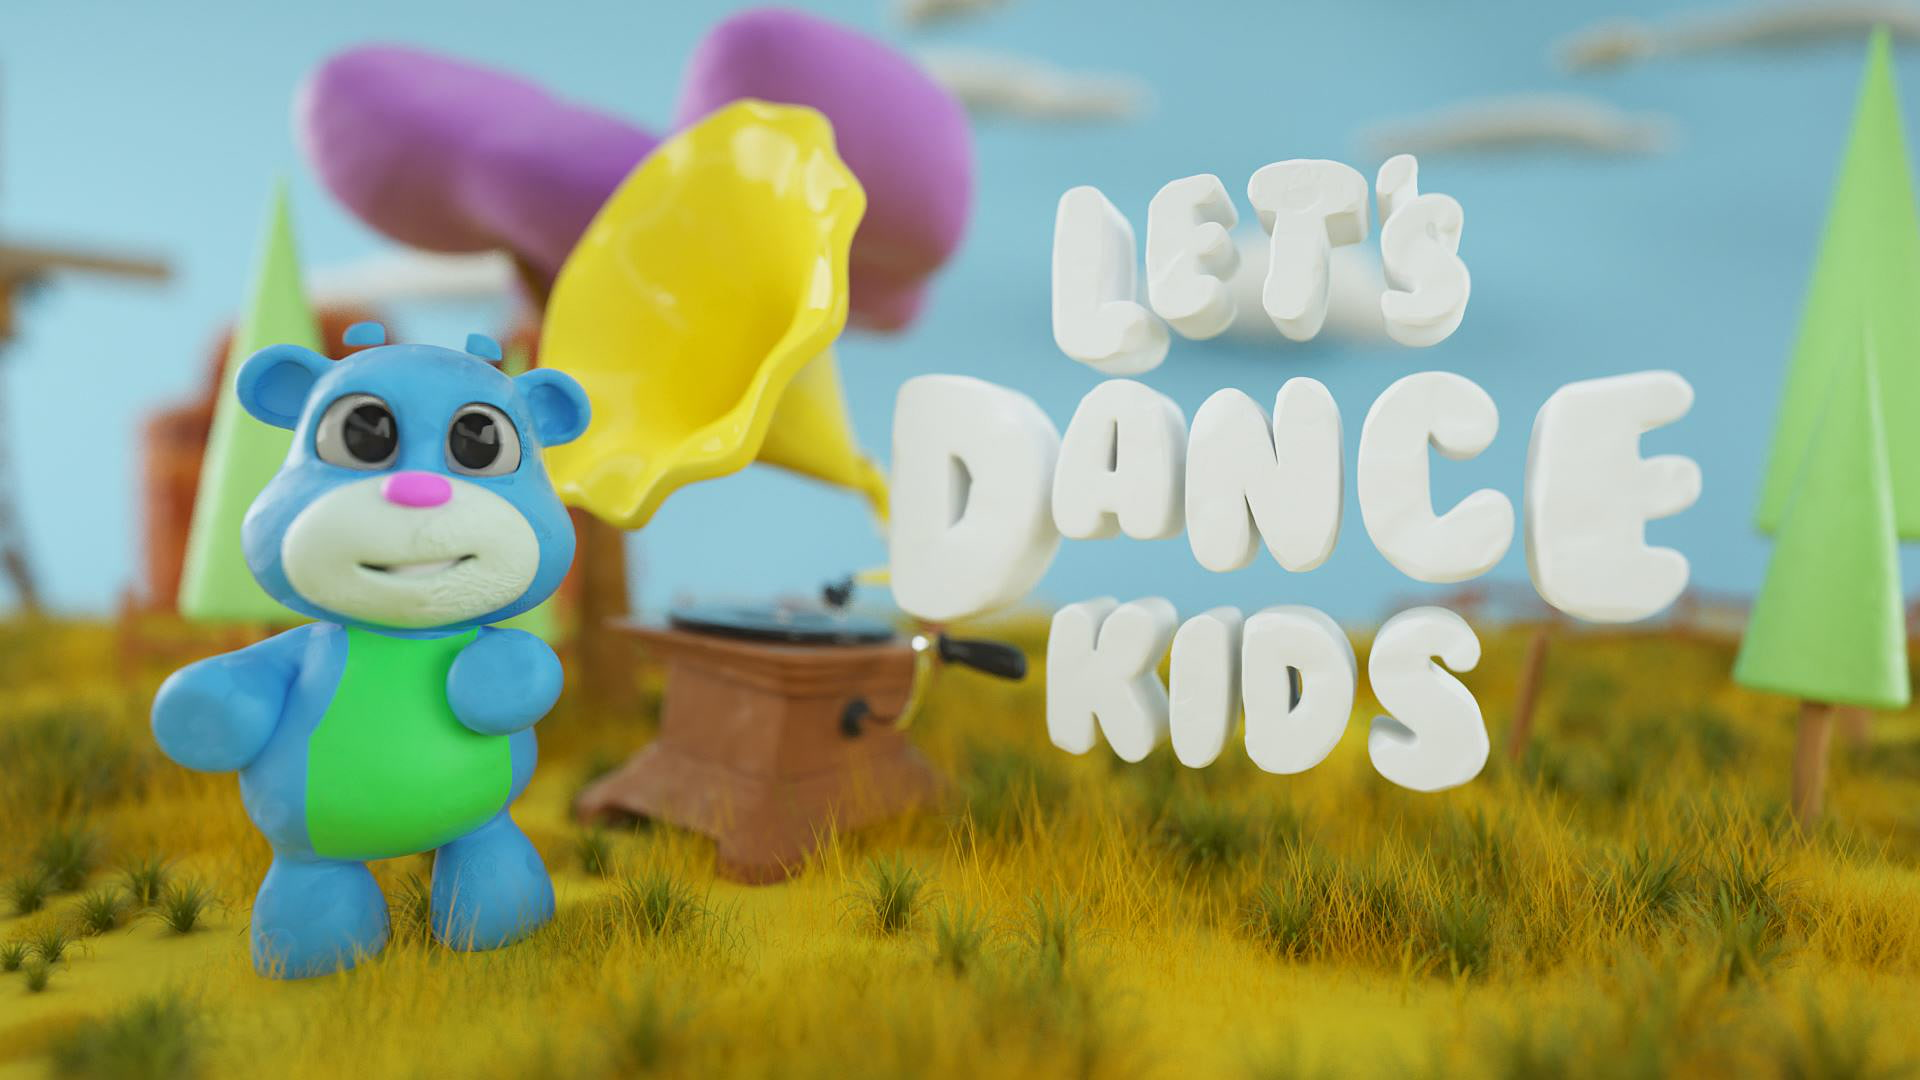 Let's Dance Kids